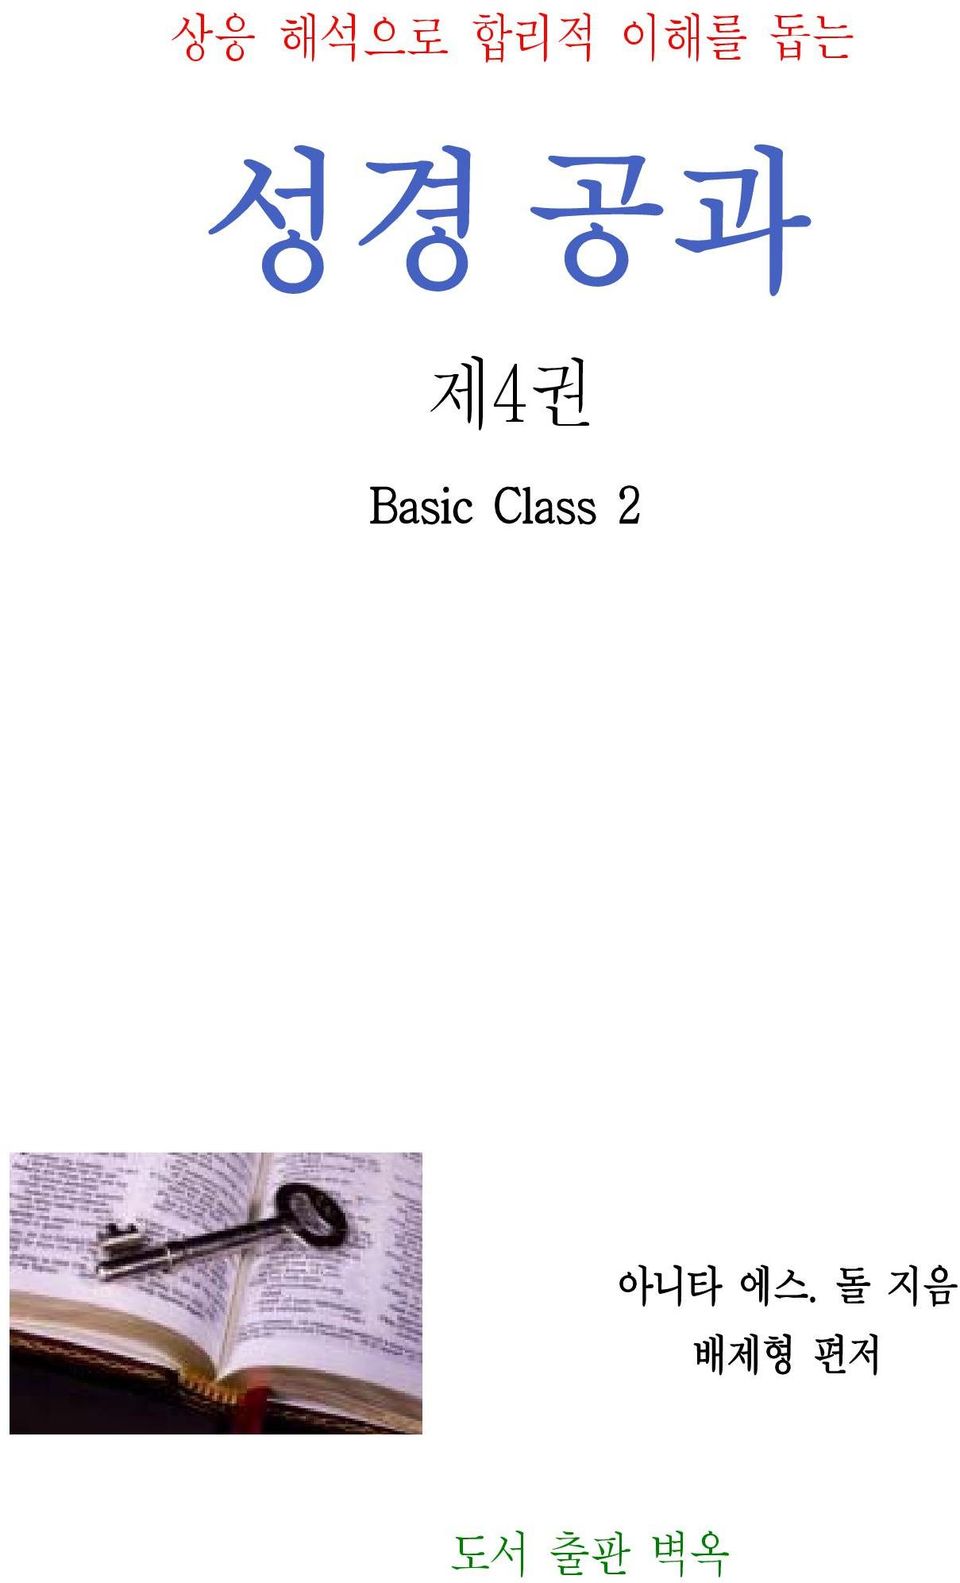 Basic Class 2